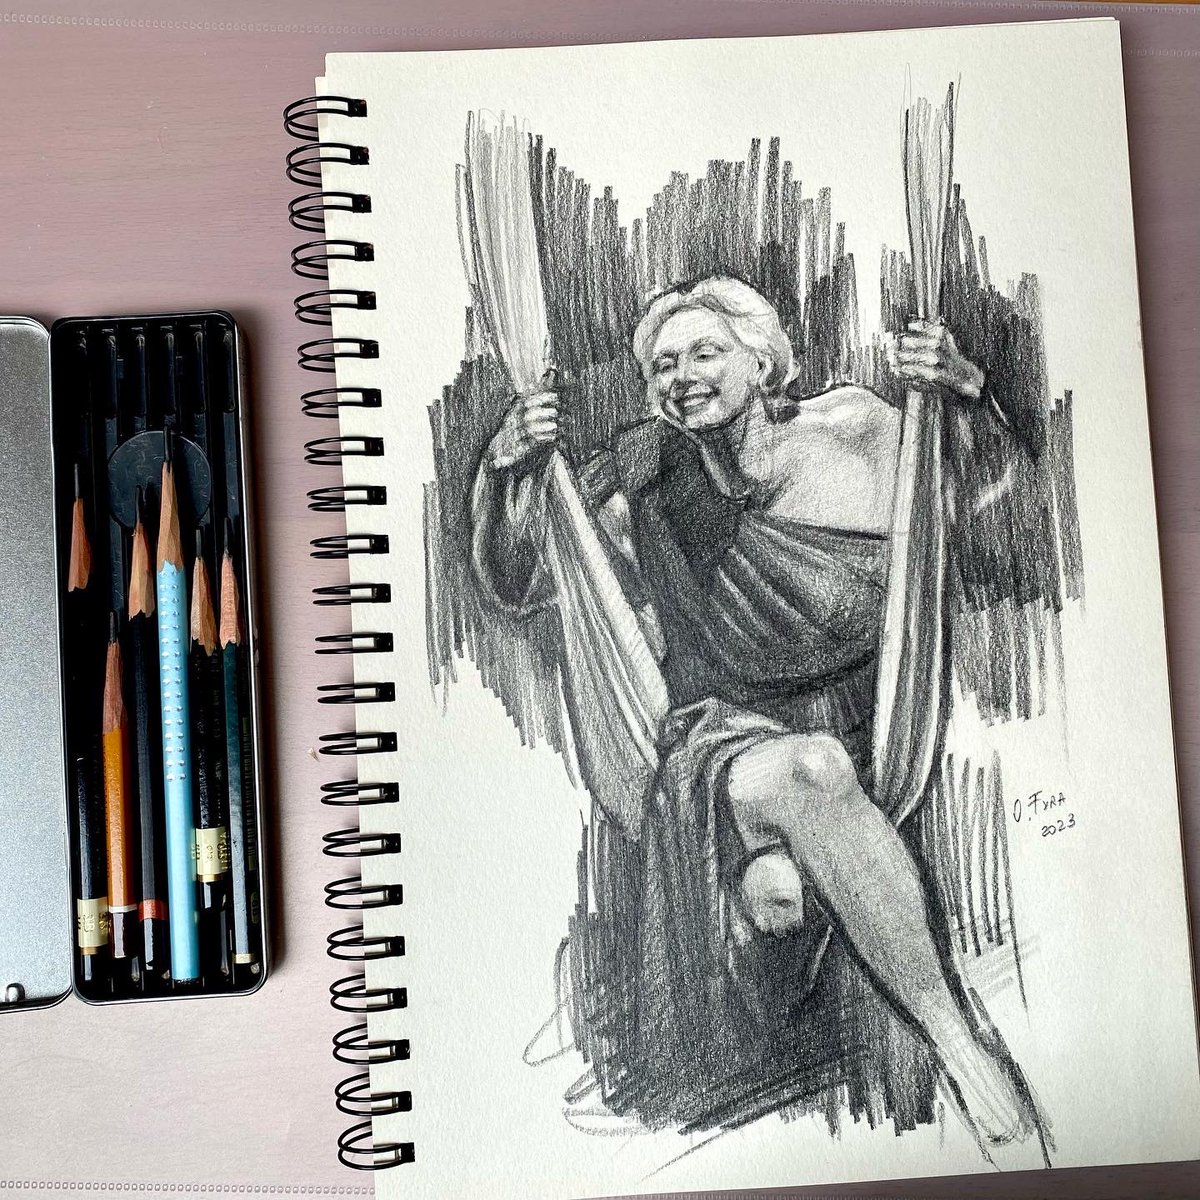 An actress. An inspiration. A queen.
Gwendoline Christie 

#drawing #украрт